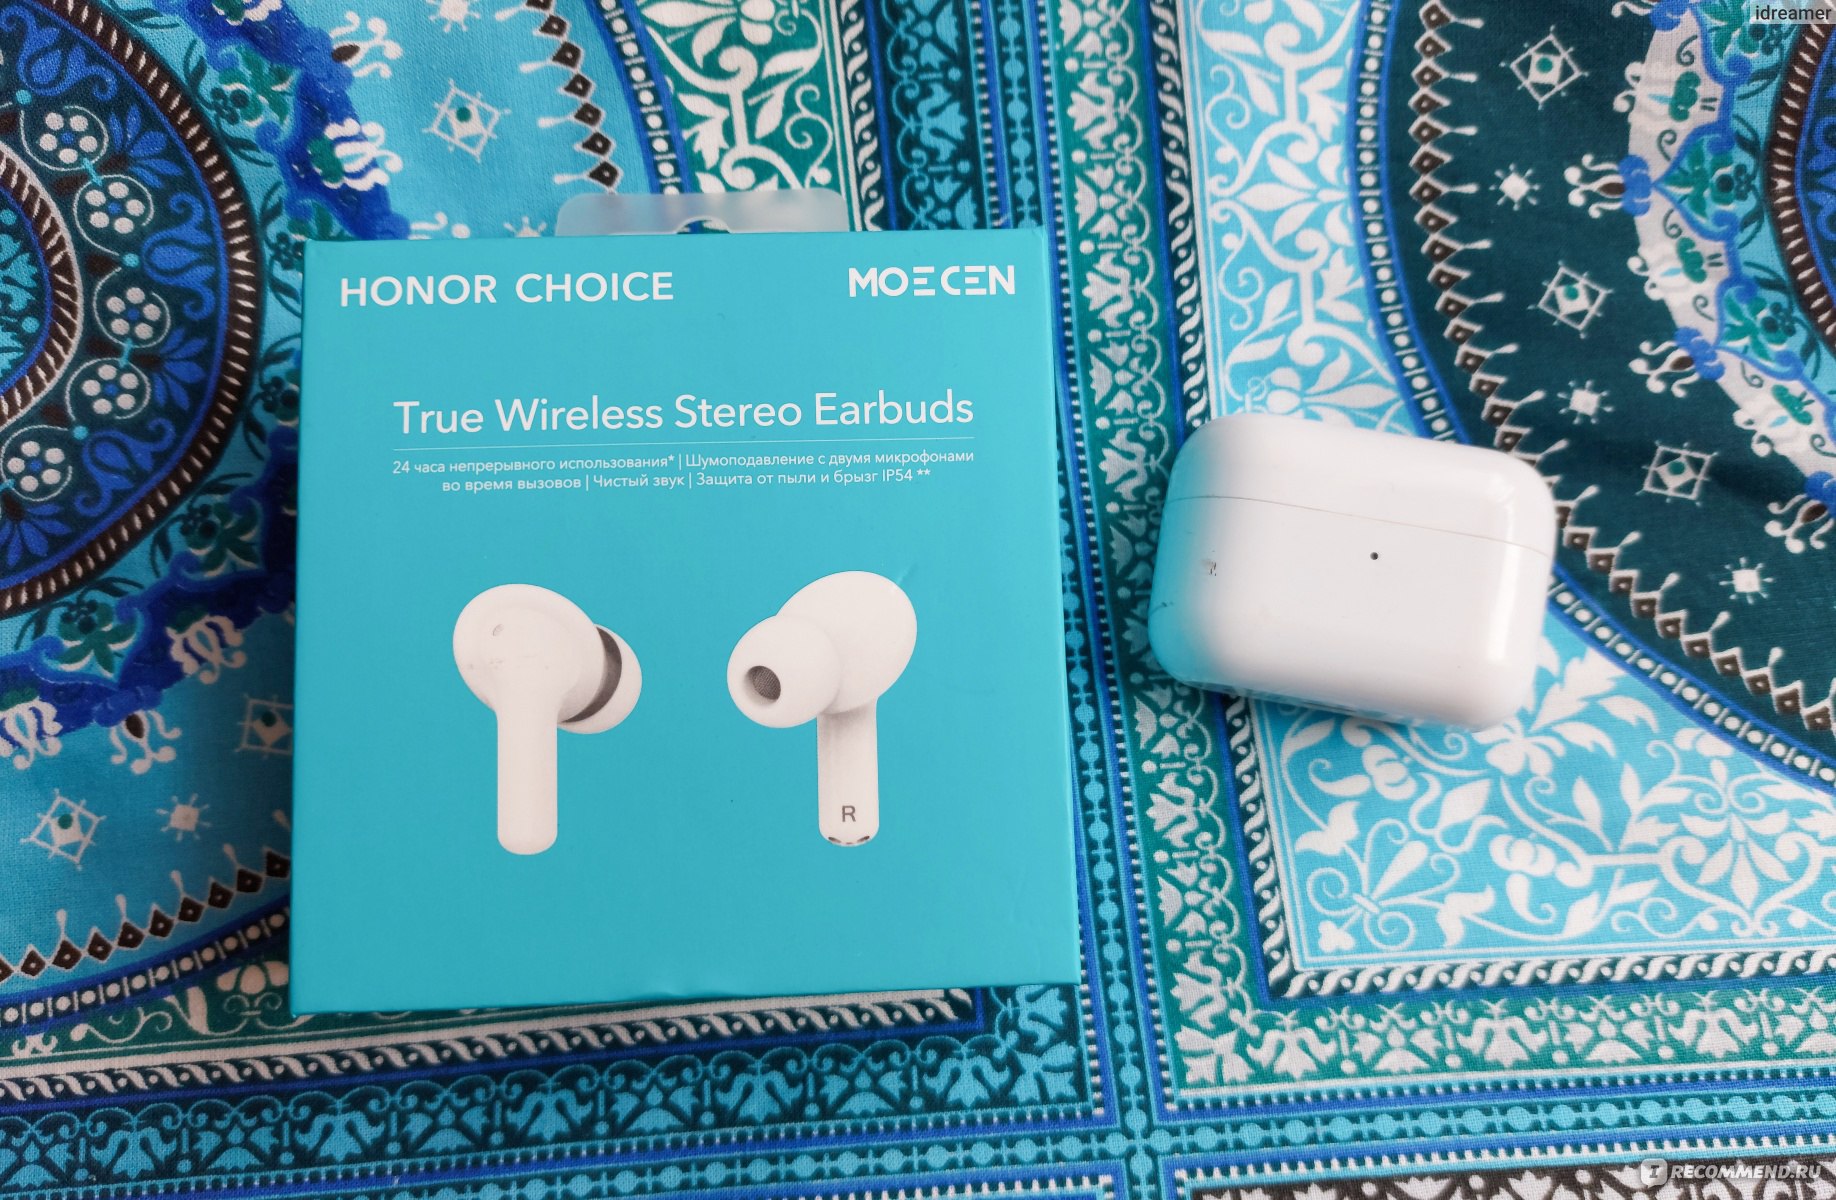 Honor tws ce79. Наушники Honor Earbuds ДНС. Honor choice Earbuds Wireless stereo ce79 ДНС. Honor choice true Wireless stereo Earbuds купить. Беспроводные наушники Honor choice ce79 TWS Earbuds отзывы.